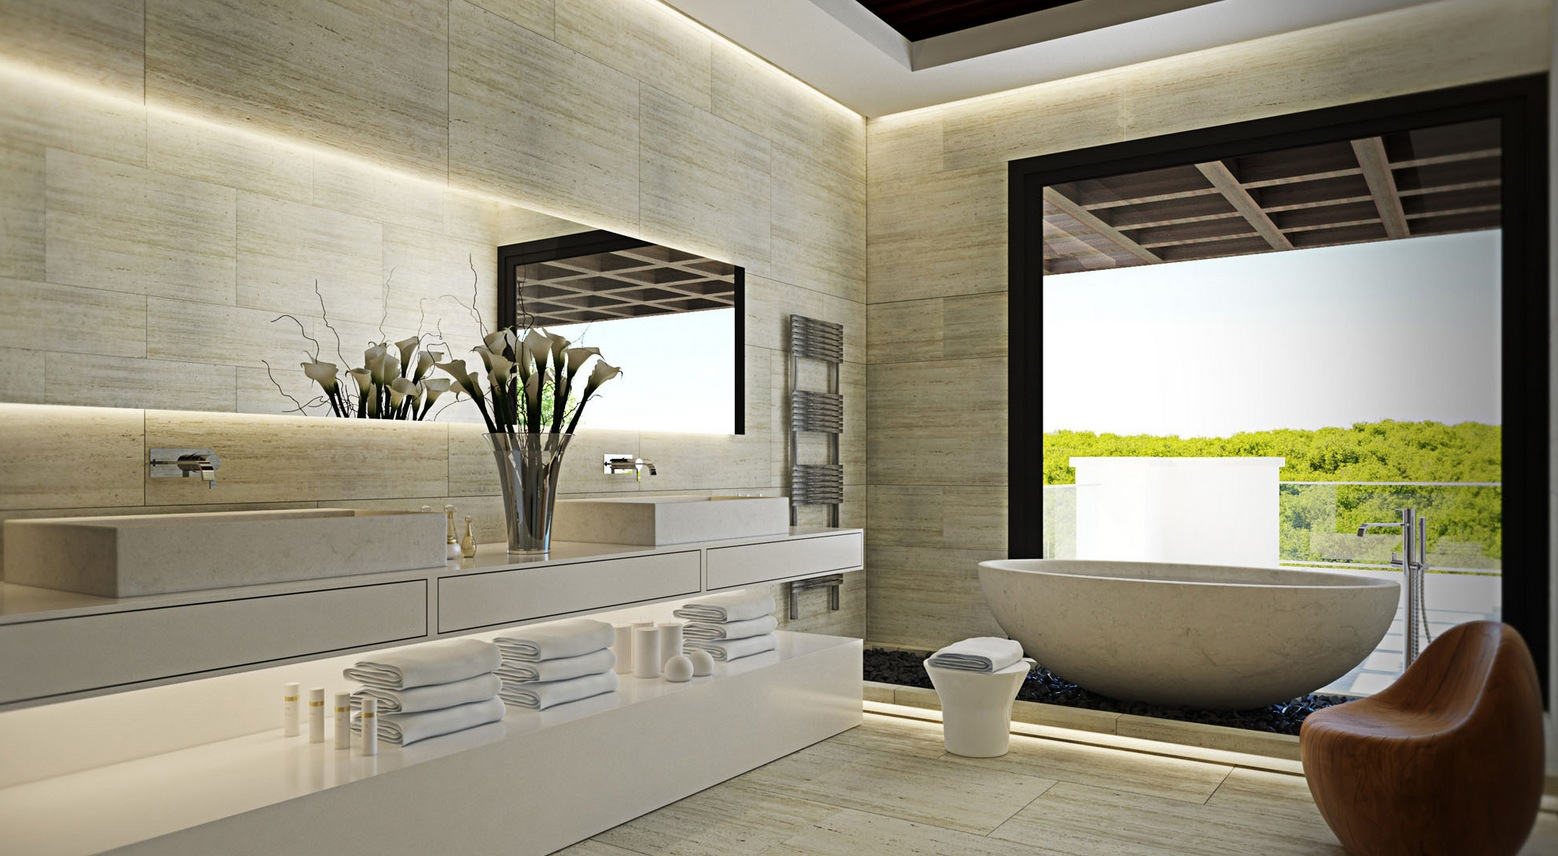 Luxurious 9 Bedroom Spanish Home With Indoor & Outdoor Pools 21